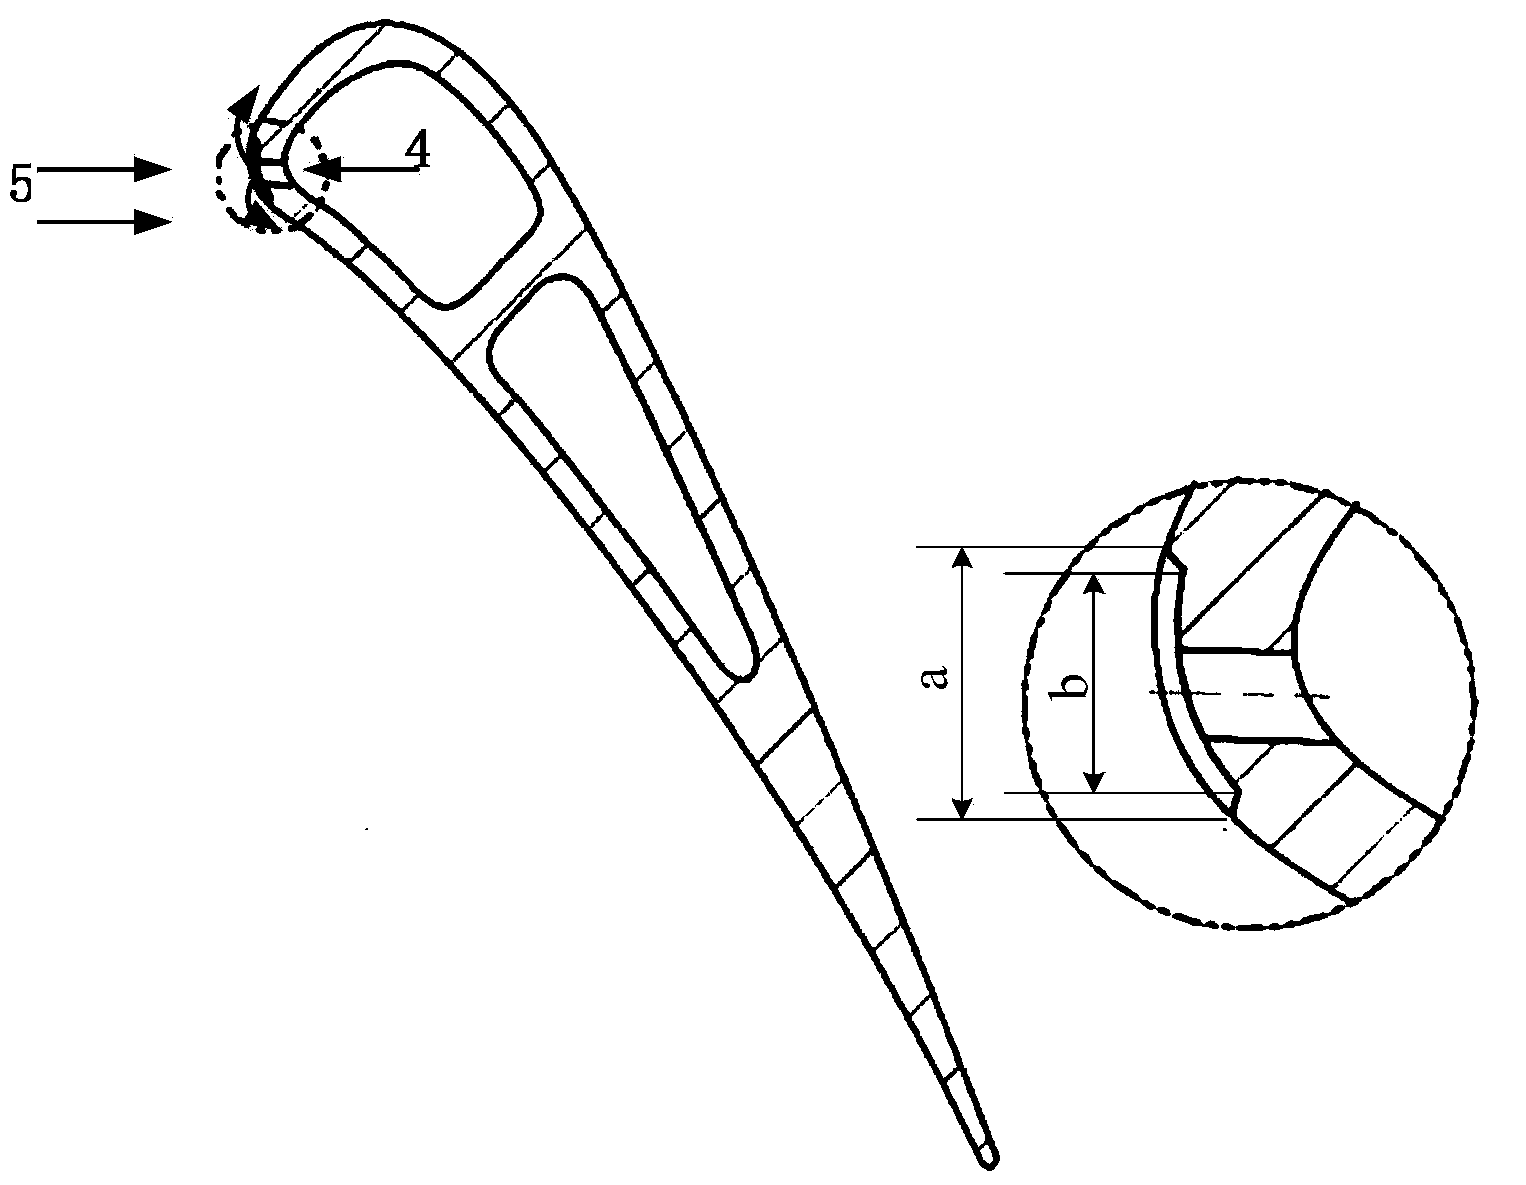 Turbine blade with leading-edge concaved cavity